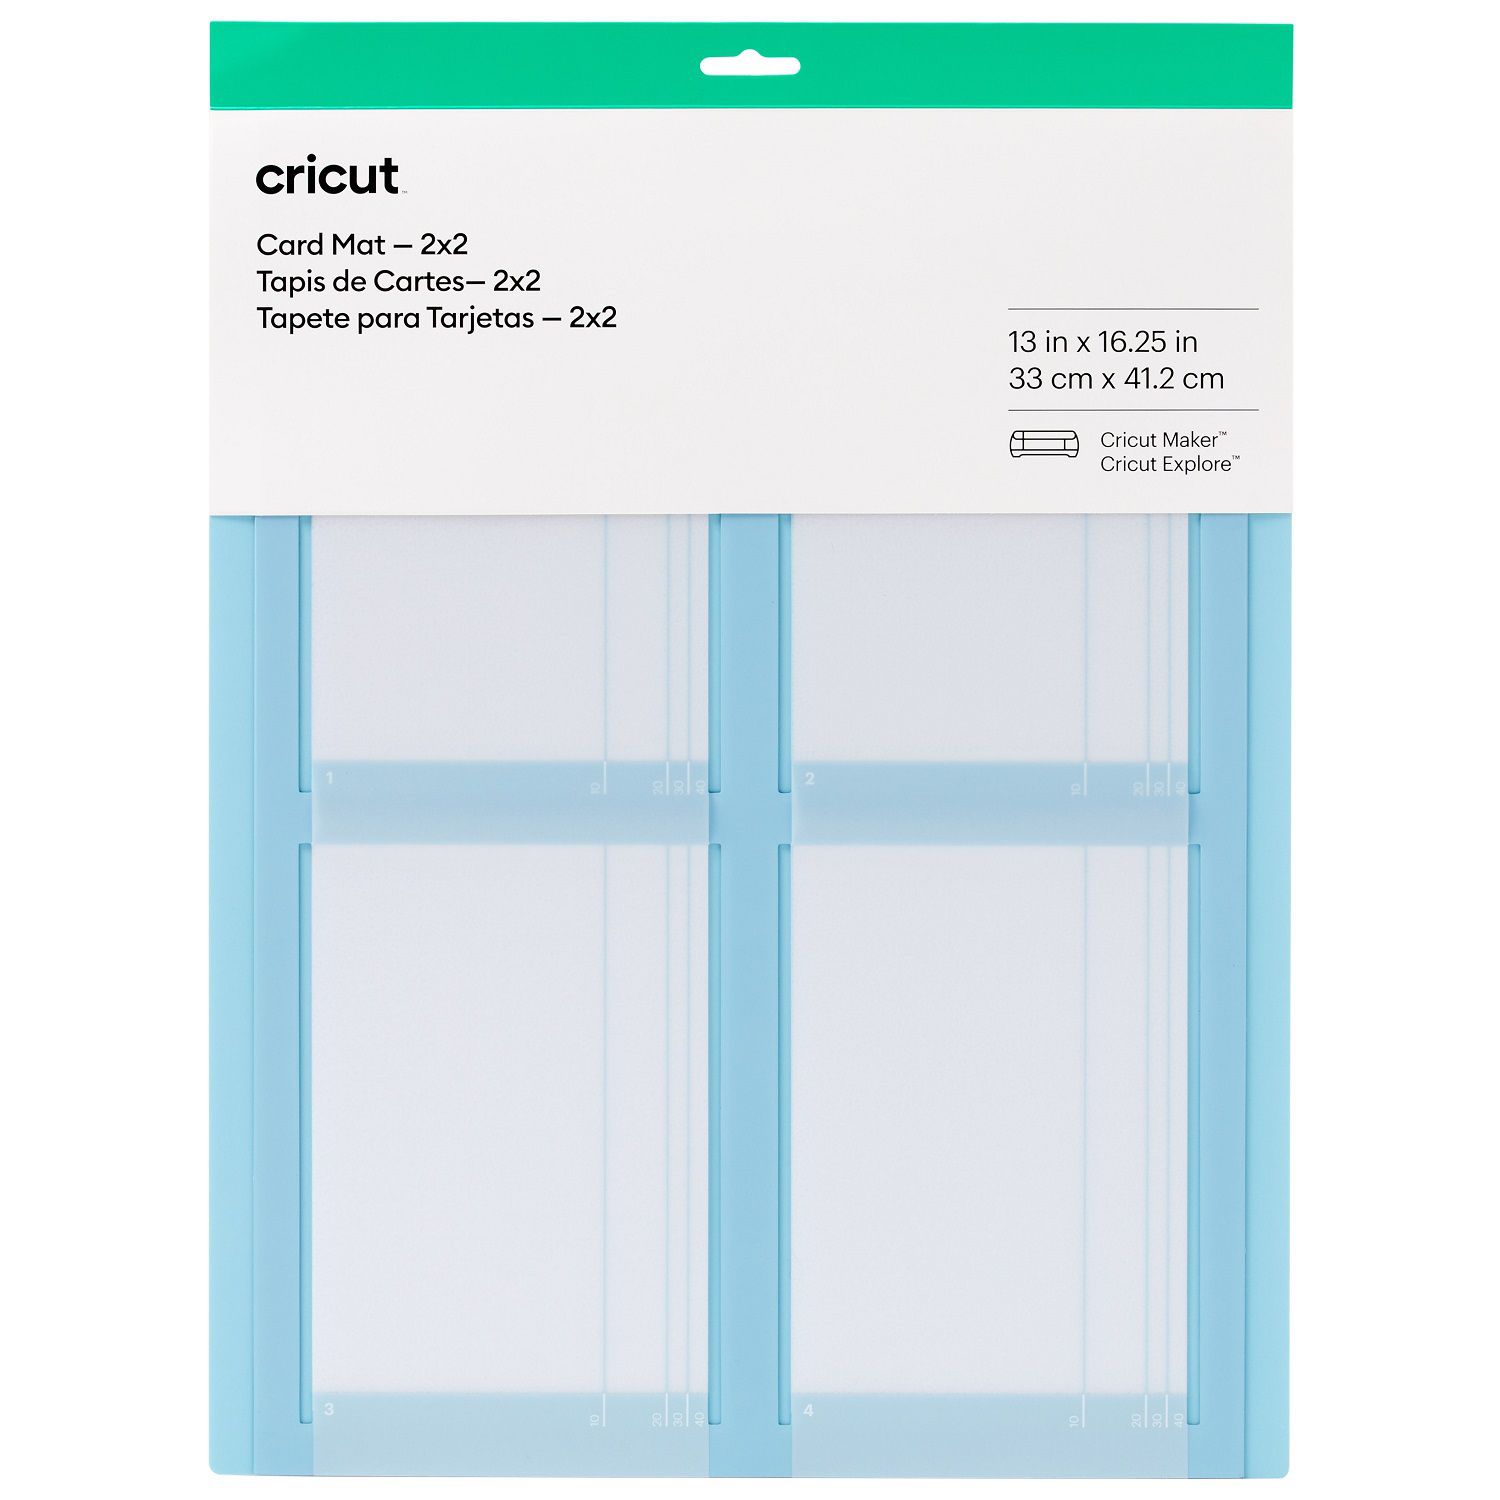 Cricut Venture Cardstock Sampler, Neutrals - 24 in x 28 in (50 ct)